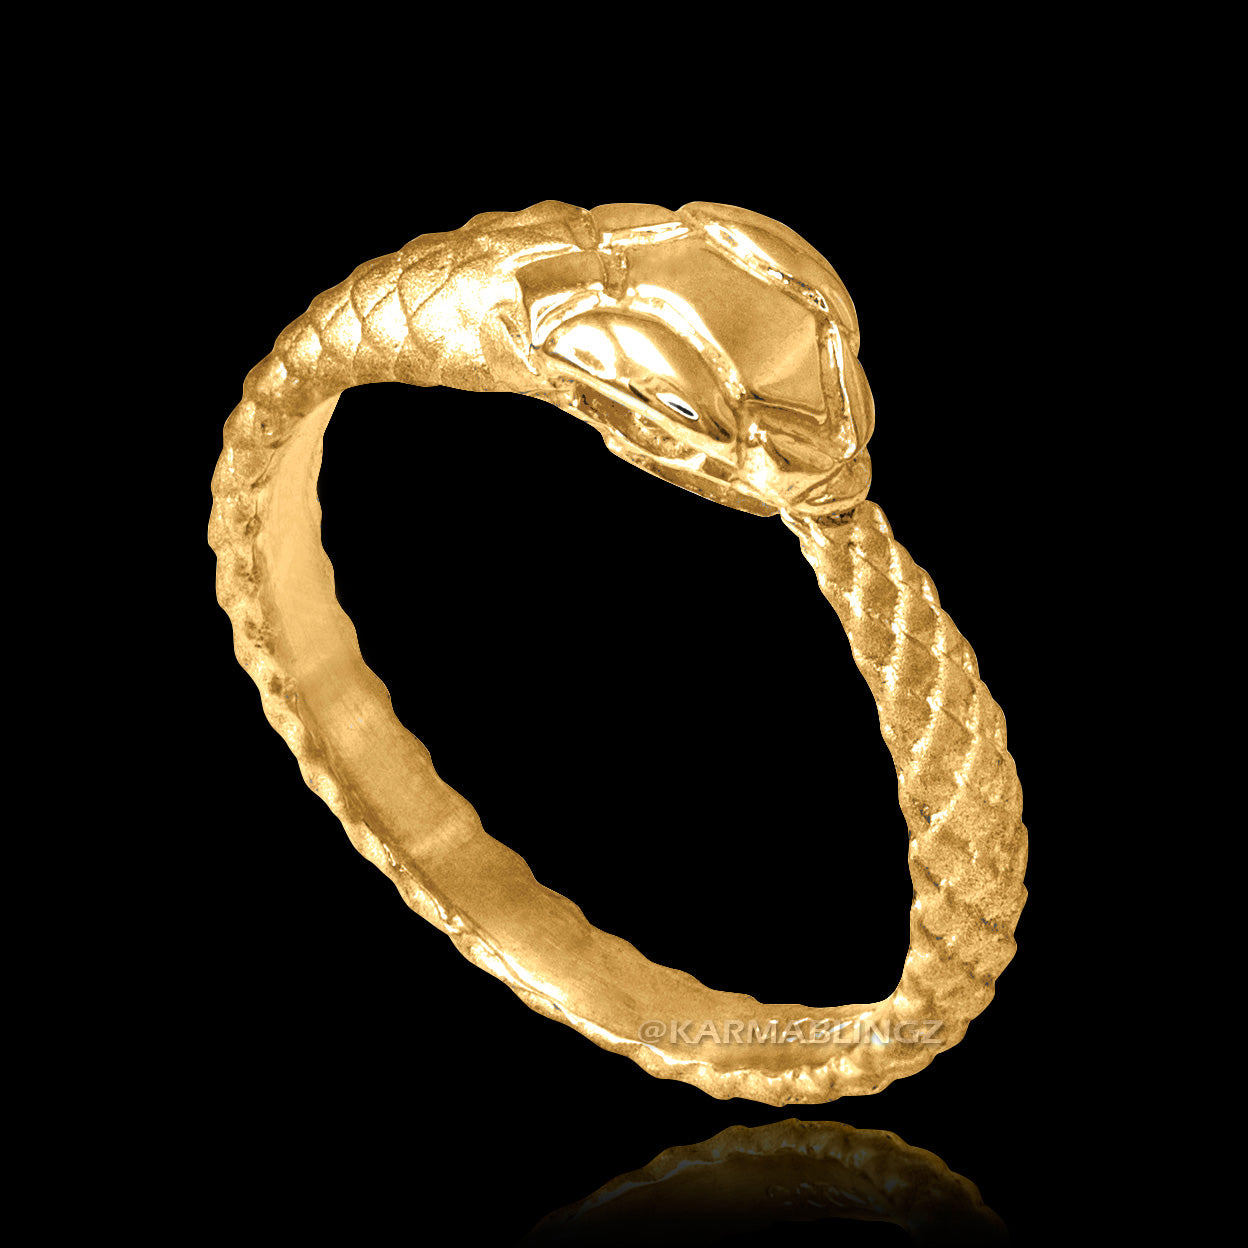 Solid Gold Tail Biting Ouroboros Snake Ring Karma Blingz